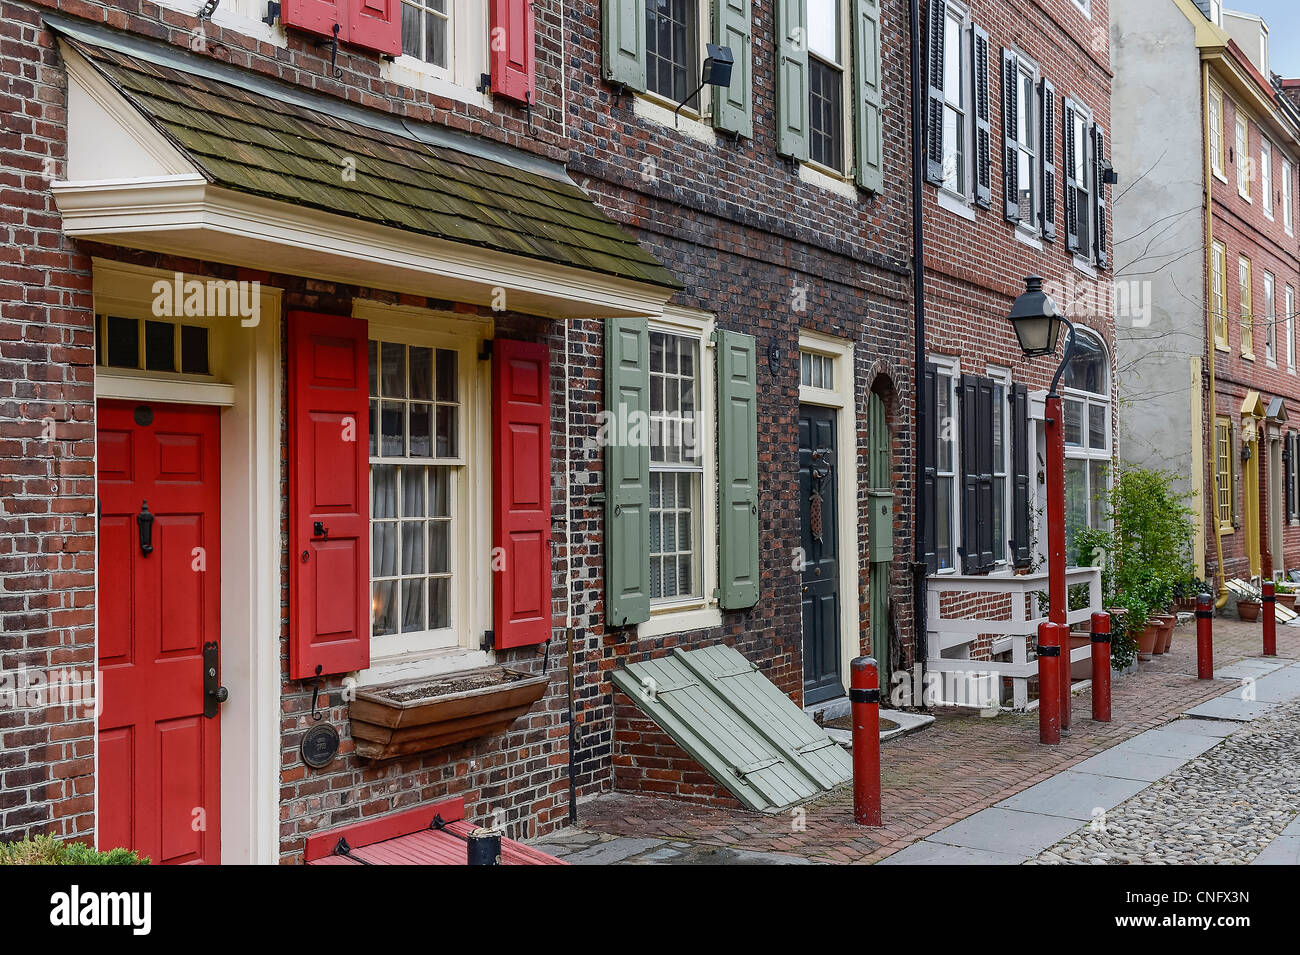 Koloniale Stadthäuser, Elfreth Gasse, älteste Wohnstraße in den Vereinigten Staaten, Philadelphia, Pennsylvania, USA Stockfoto